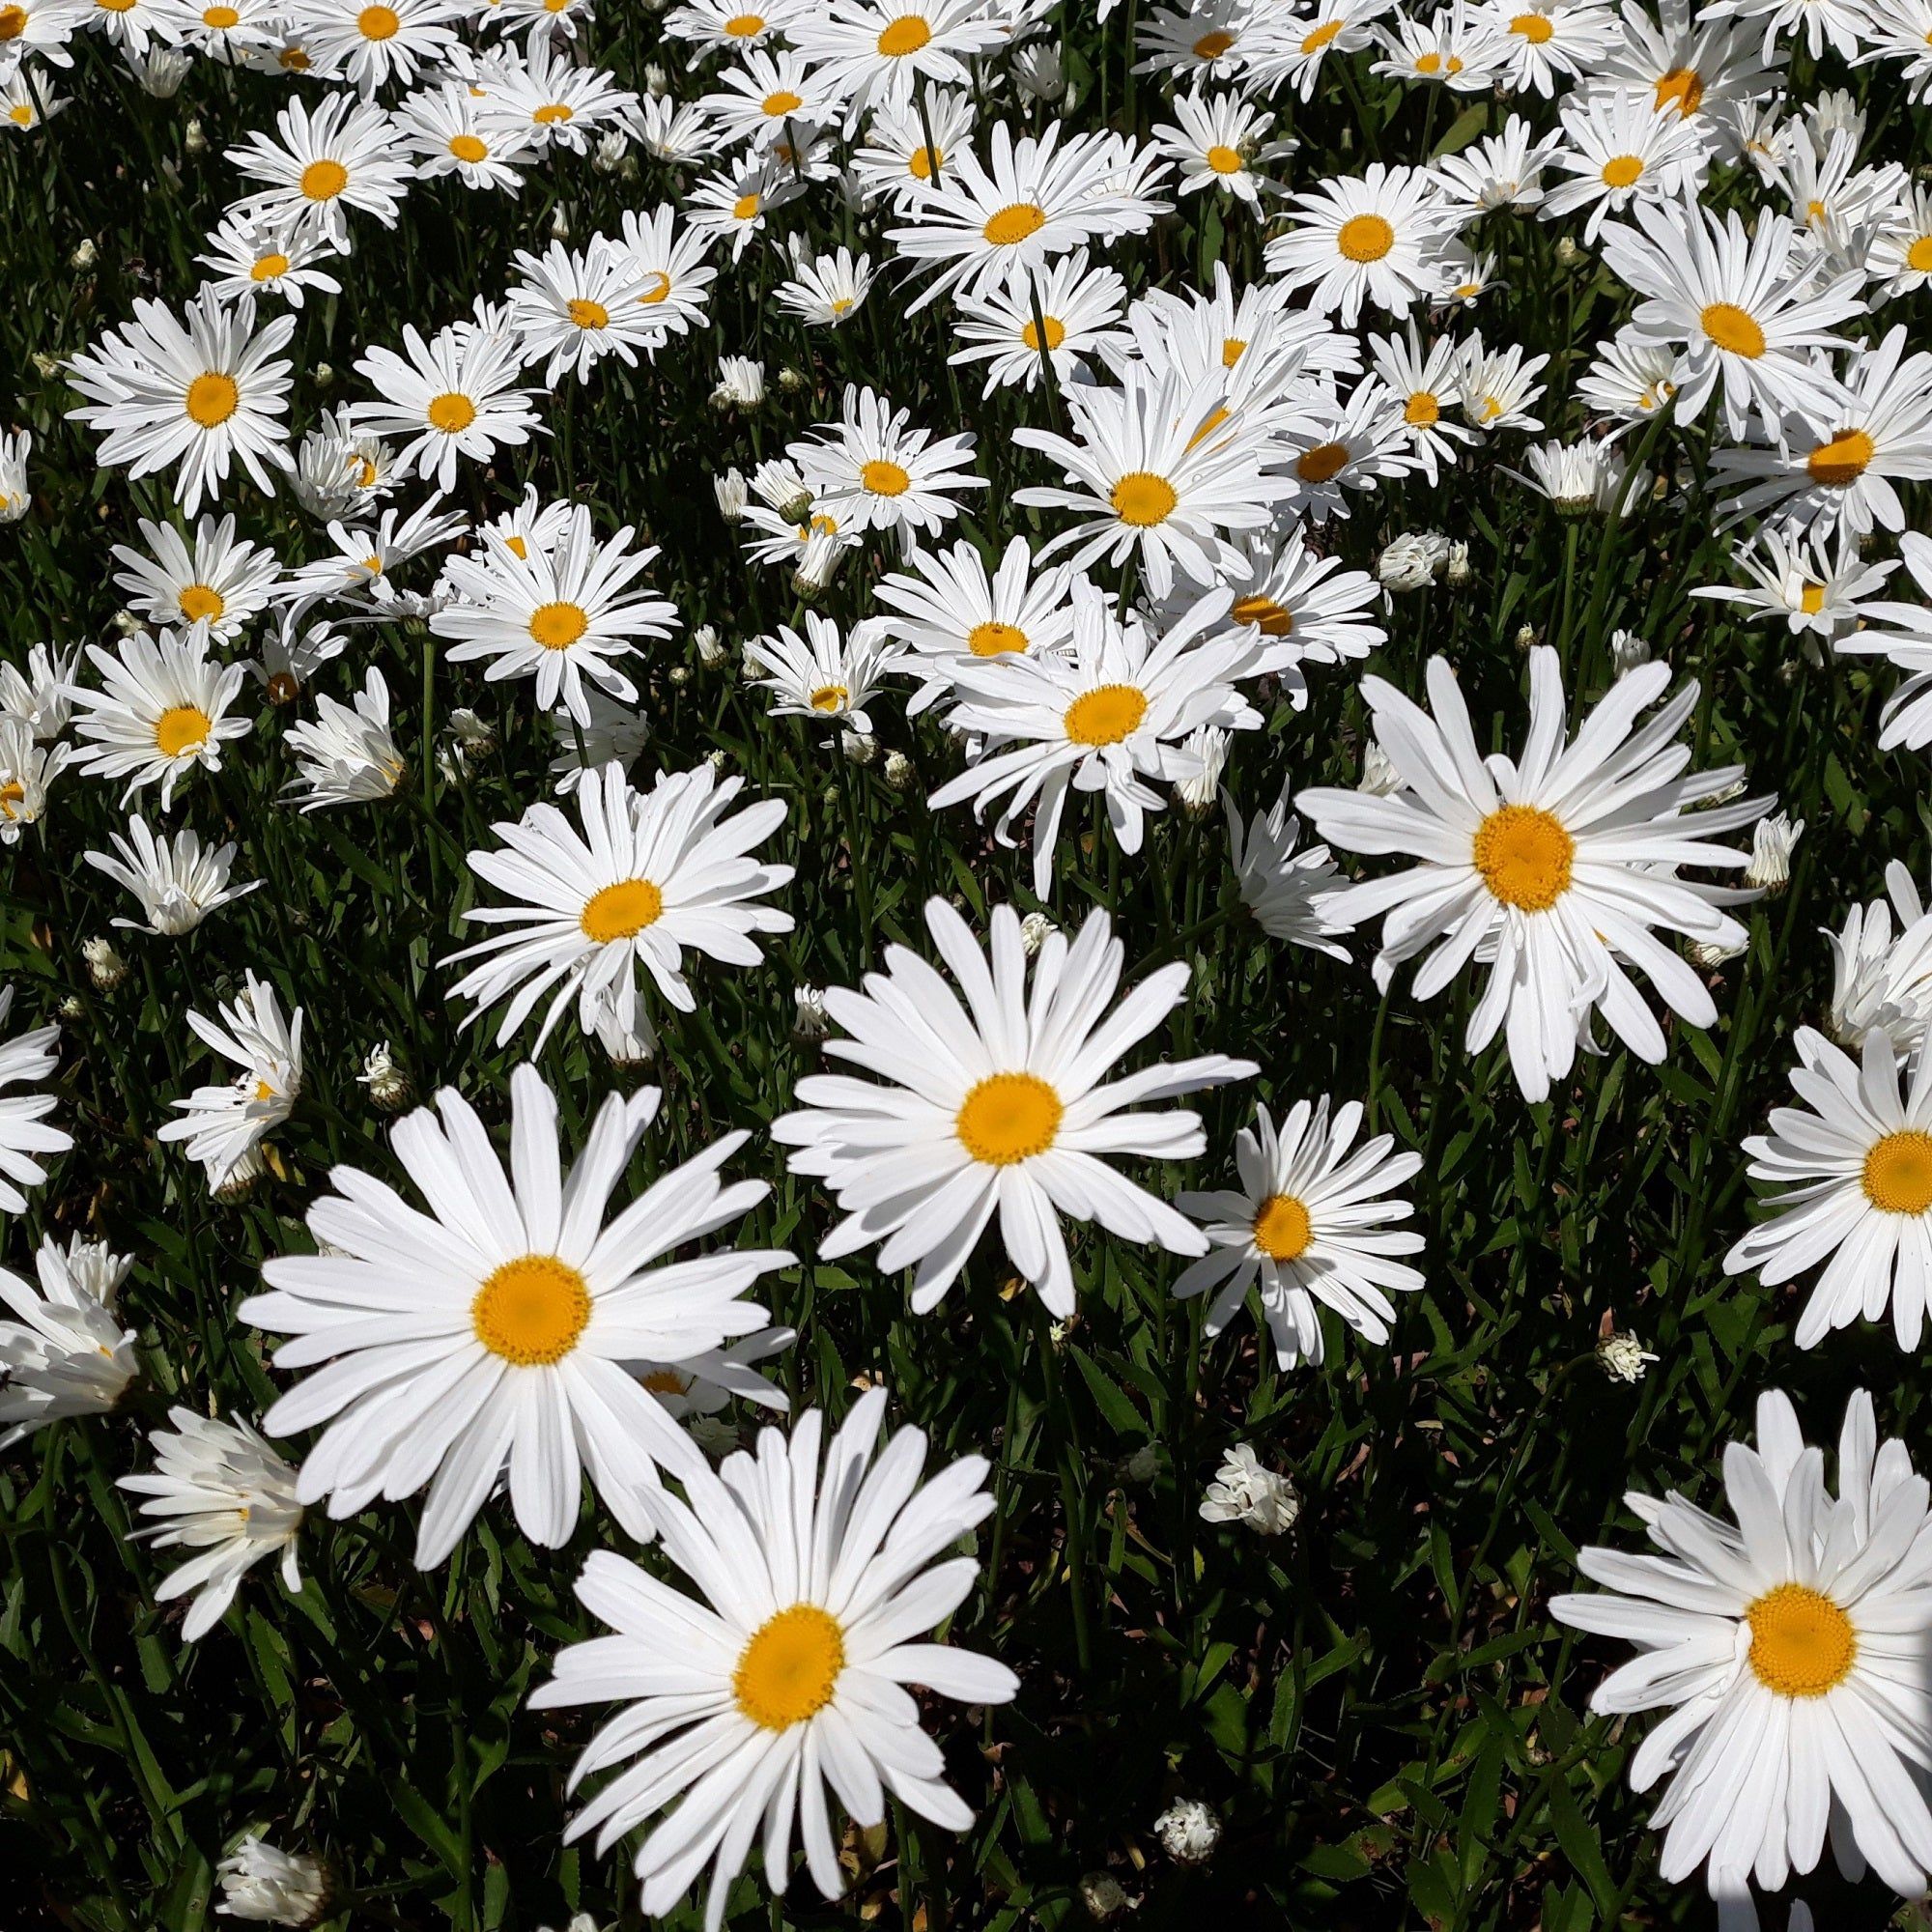 Chrysanthemum - May Queen seeds